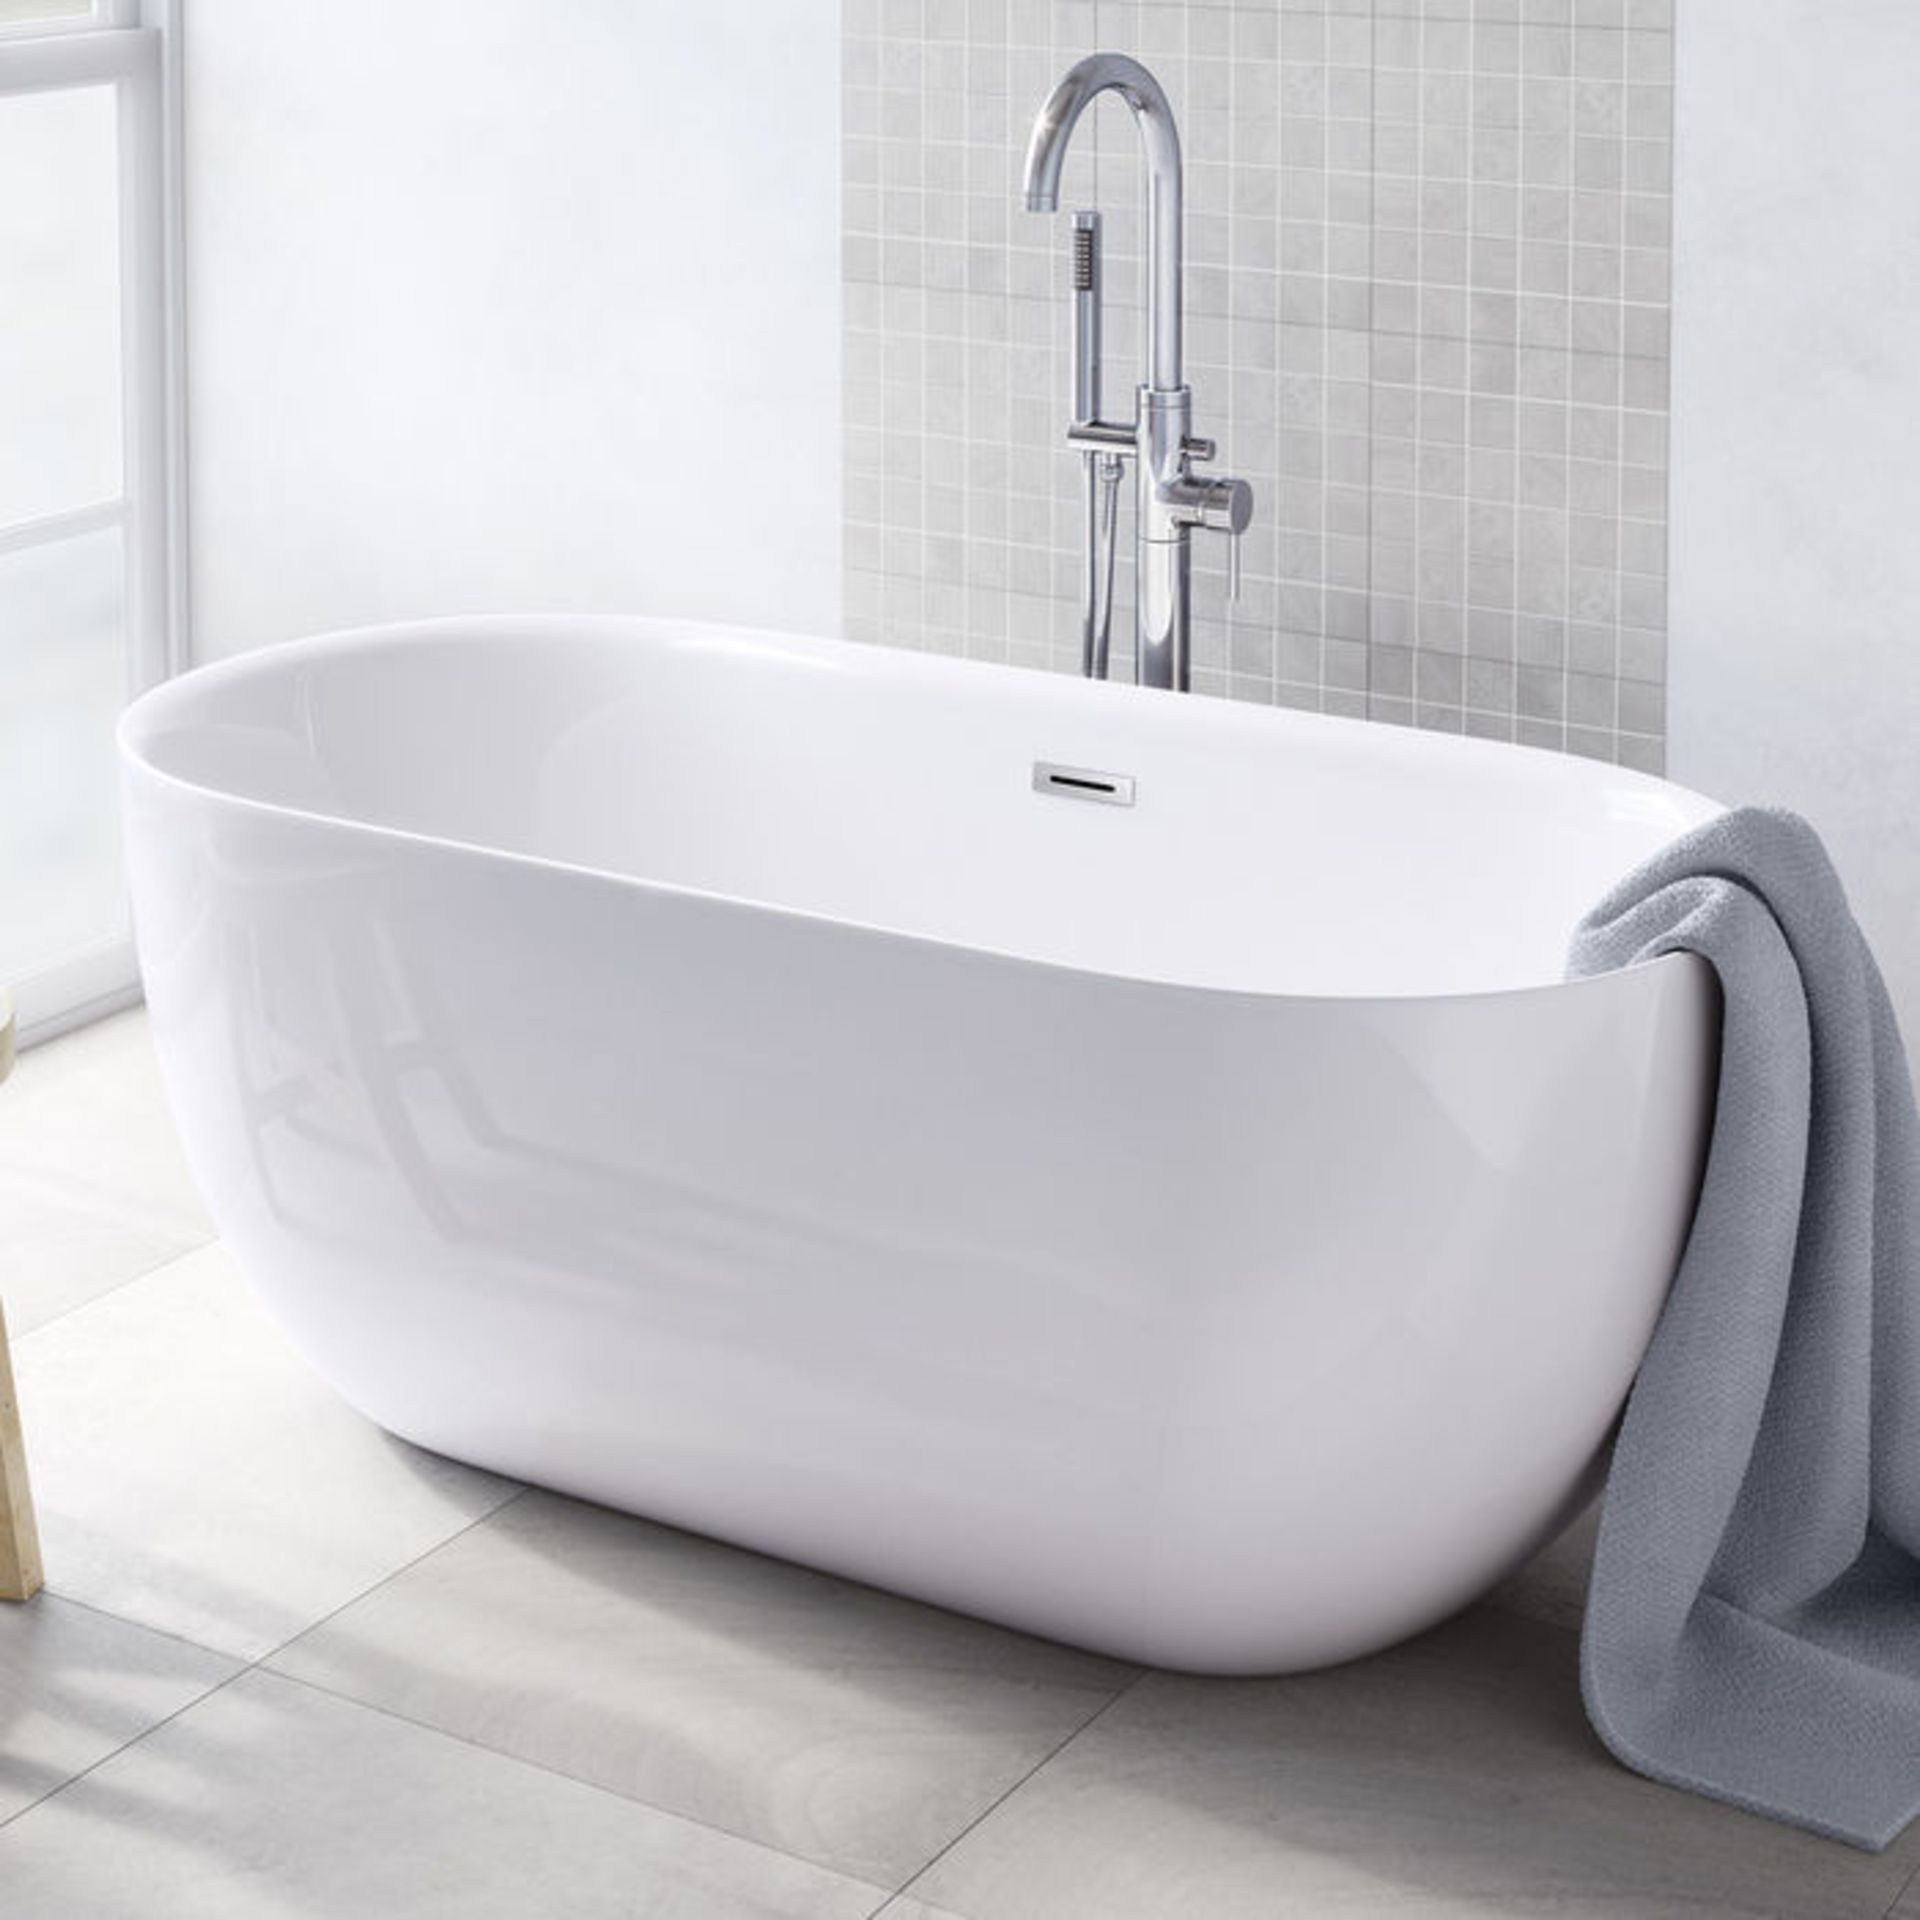 (PJ227) 1500x720mm Mya Freestanding Bath. RRP £1,124.99. Manufactured from high quality gloss